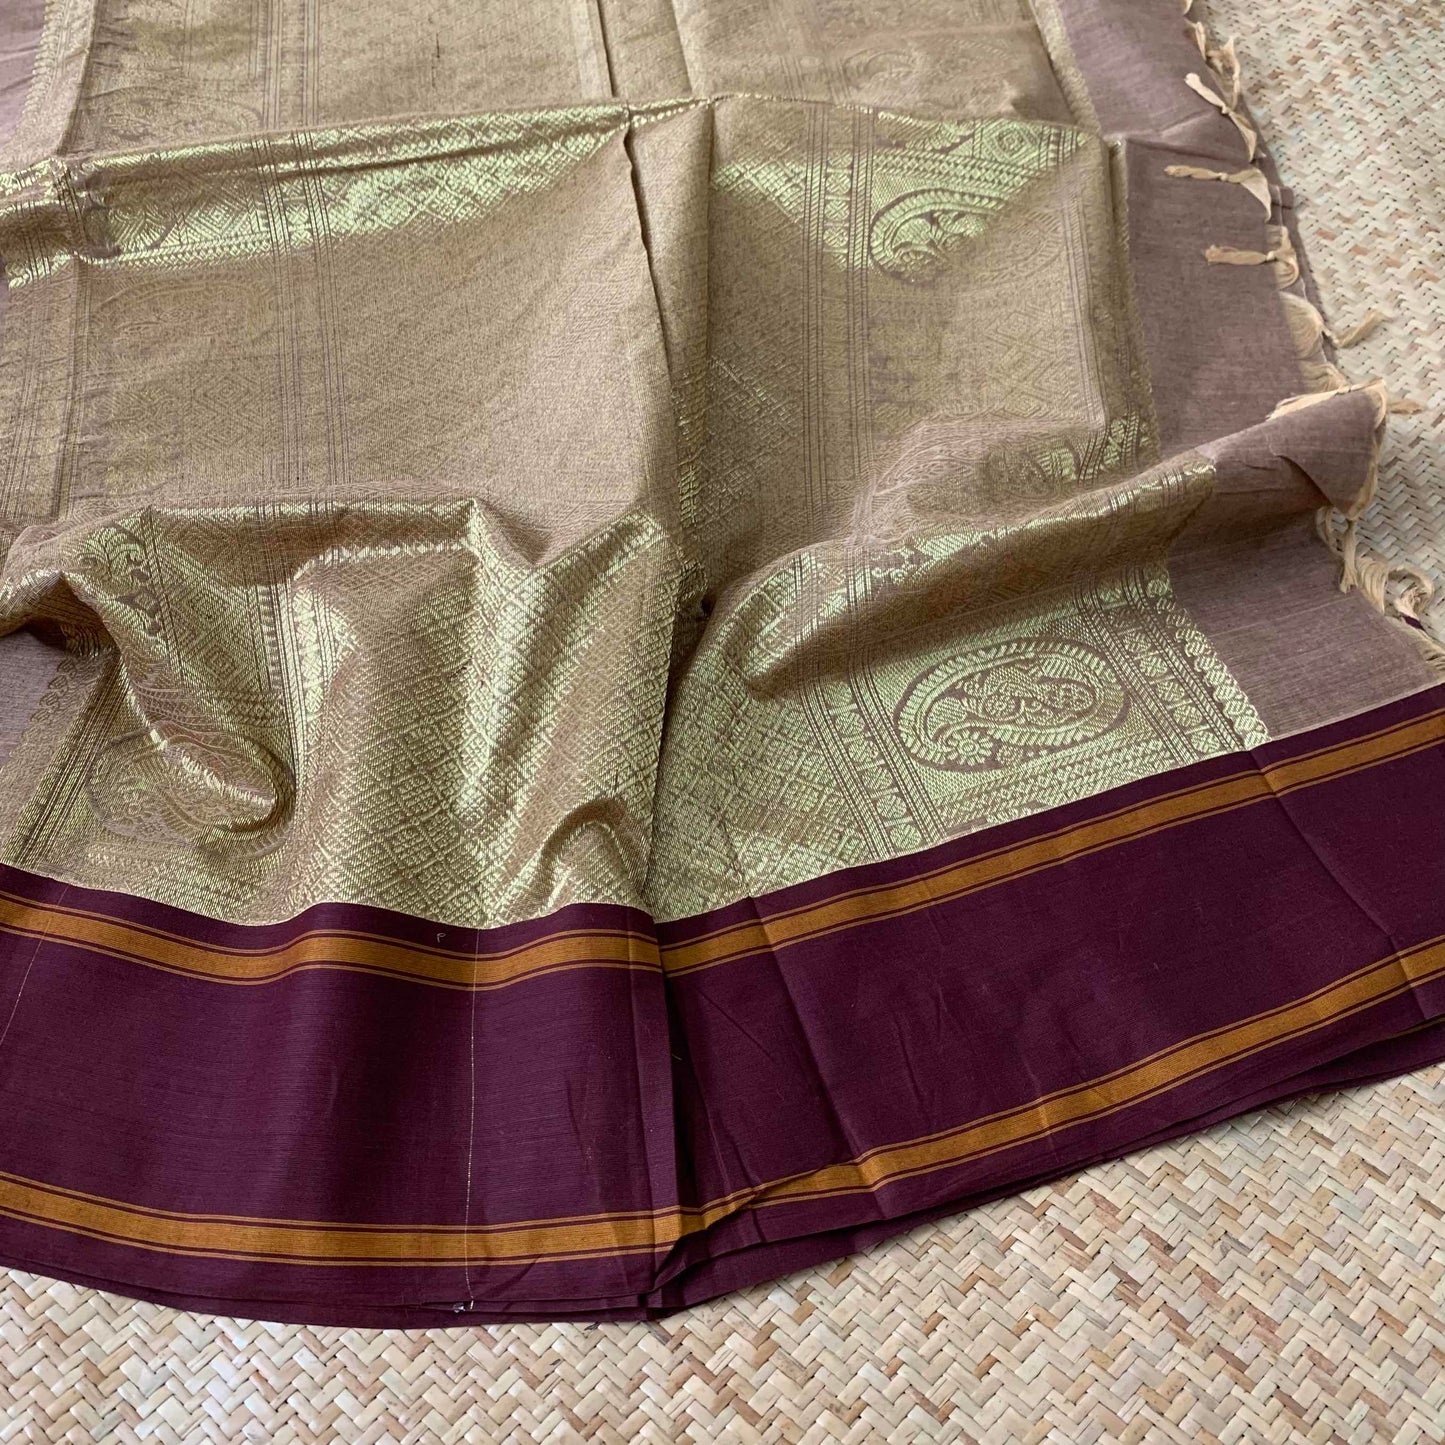 Kanchipuram Cotton Saree, Chocolate Brown Double Tone Saree with Brown Border, Grand Pallu and Yazhi Chakkaram Butta